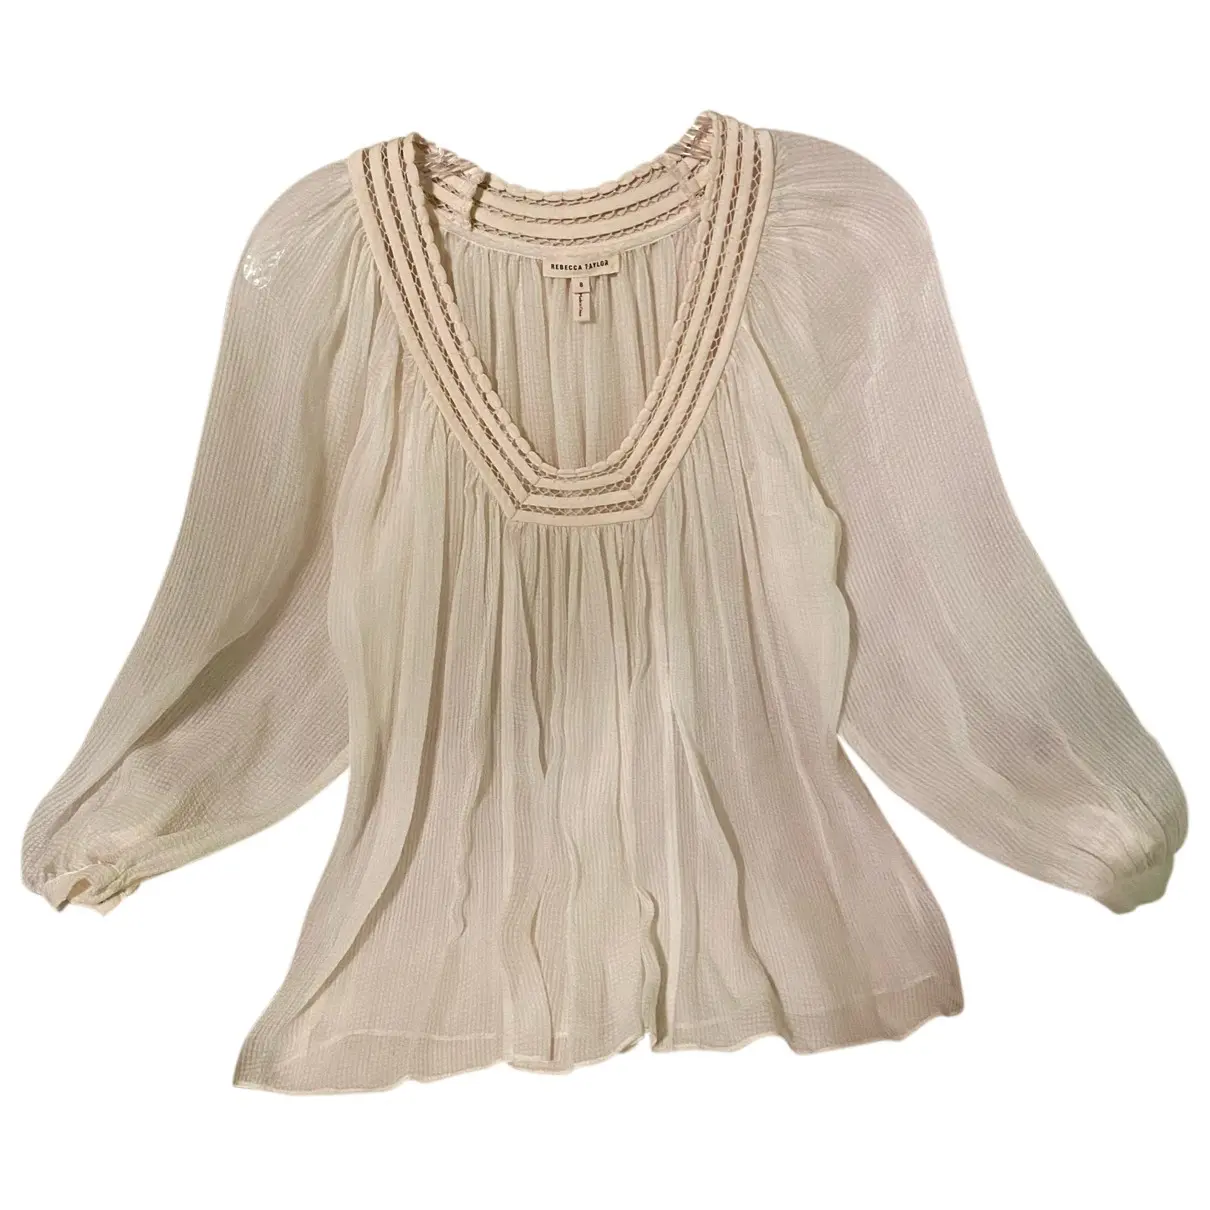 Silk blouse Rebecca Taylor